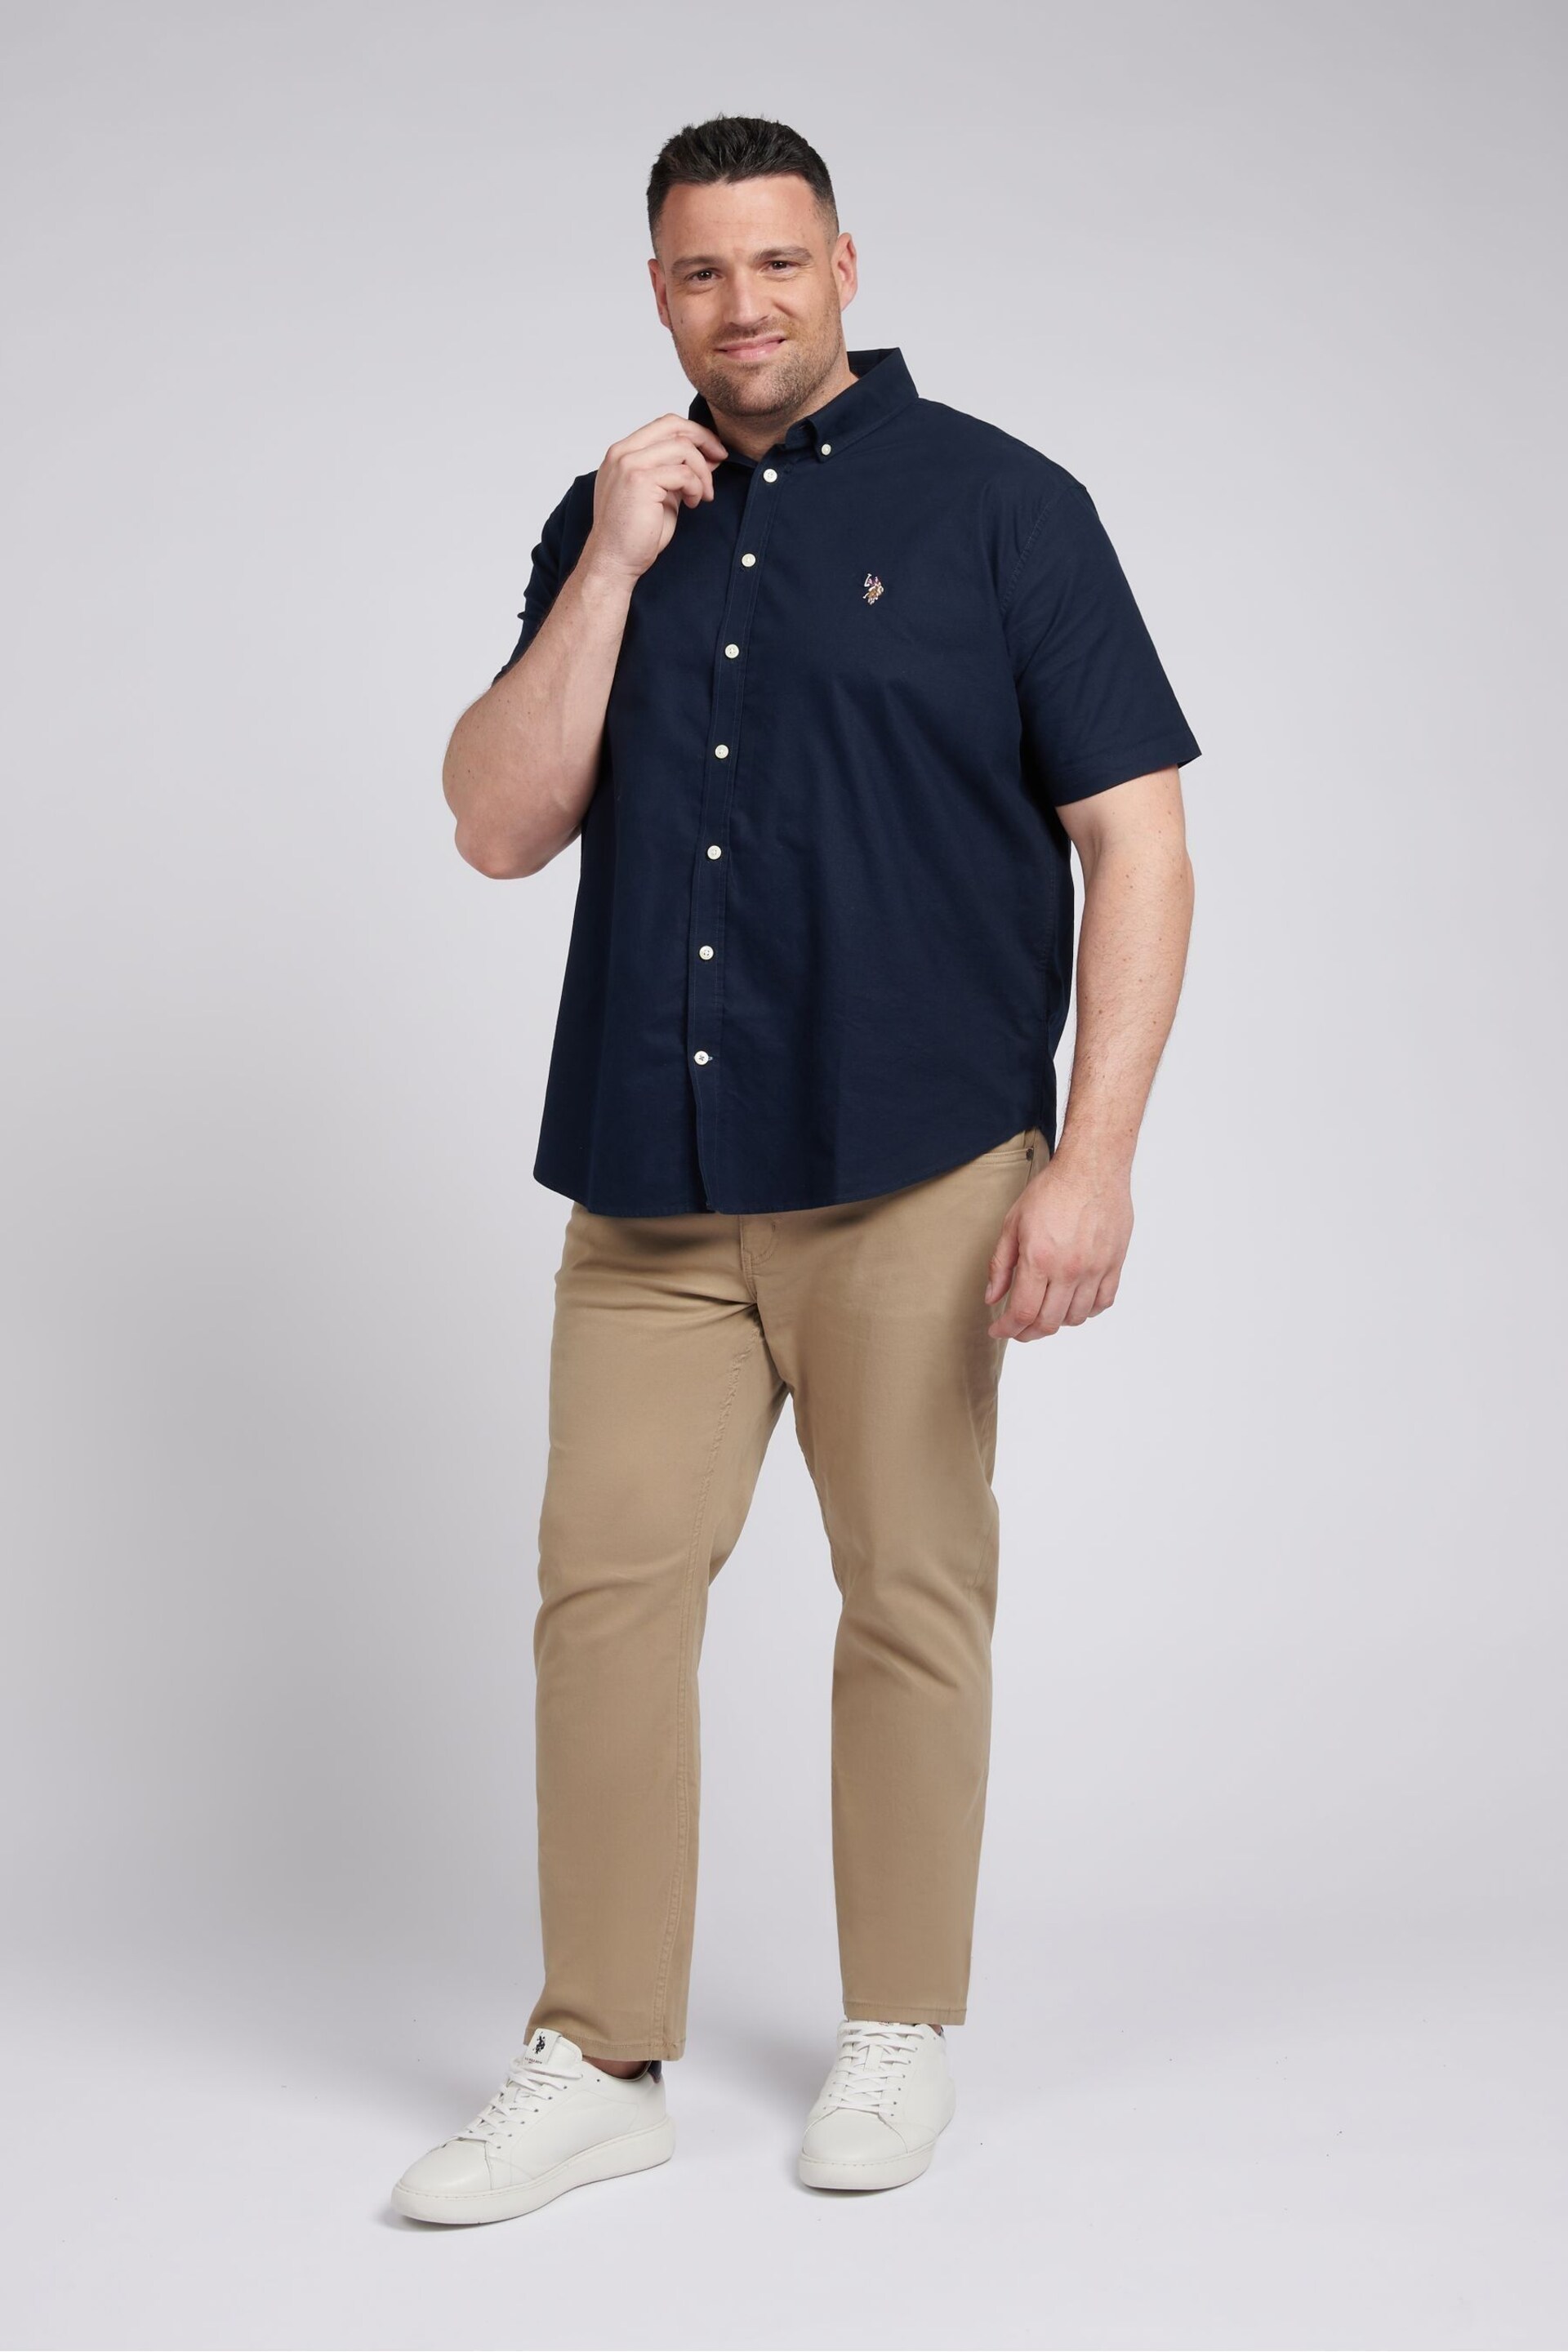 U.S. Polo Assn. Mens Blue Big & Tall Short Sleeve Oxford Shirt - Image 3 of 3